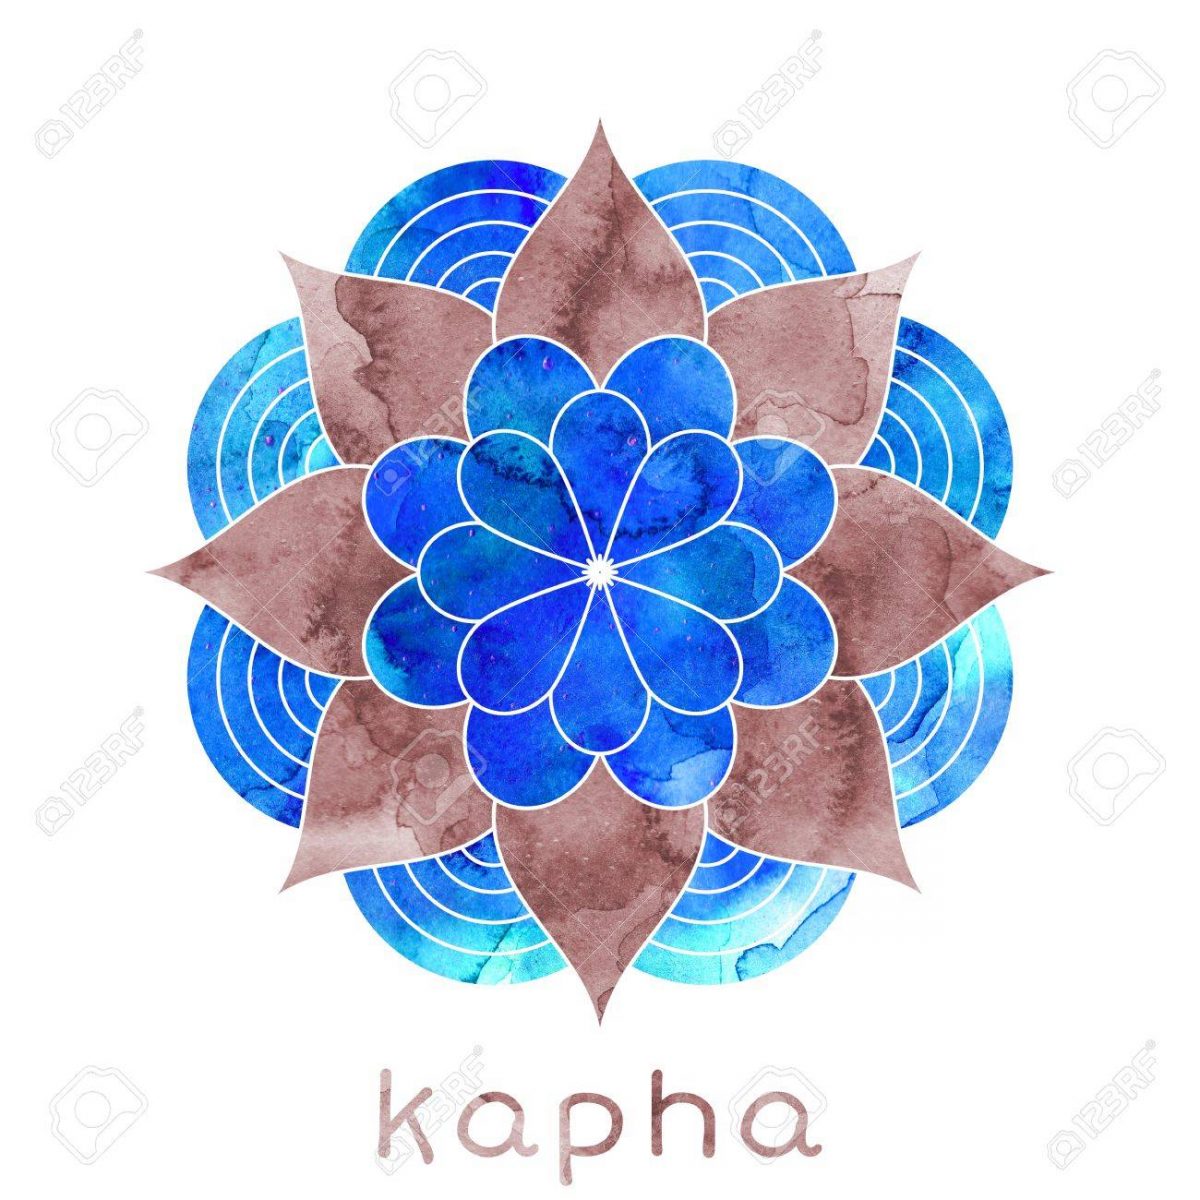 66215969-kapha-dosha-abstract-symbol-with-watercolor-texture-ayurvedic-body-type-1200x1200.jpg